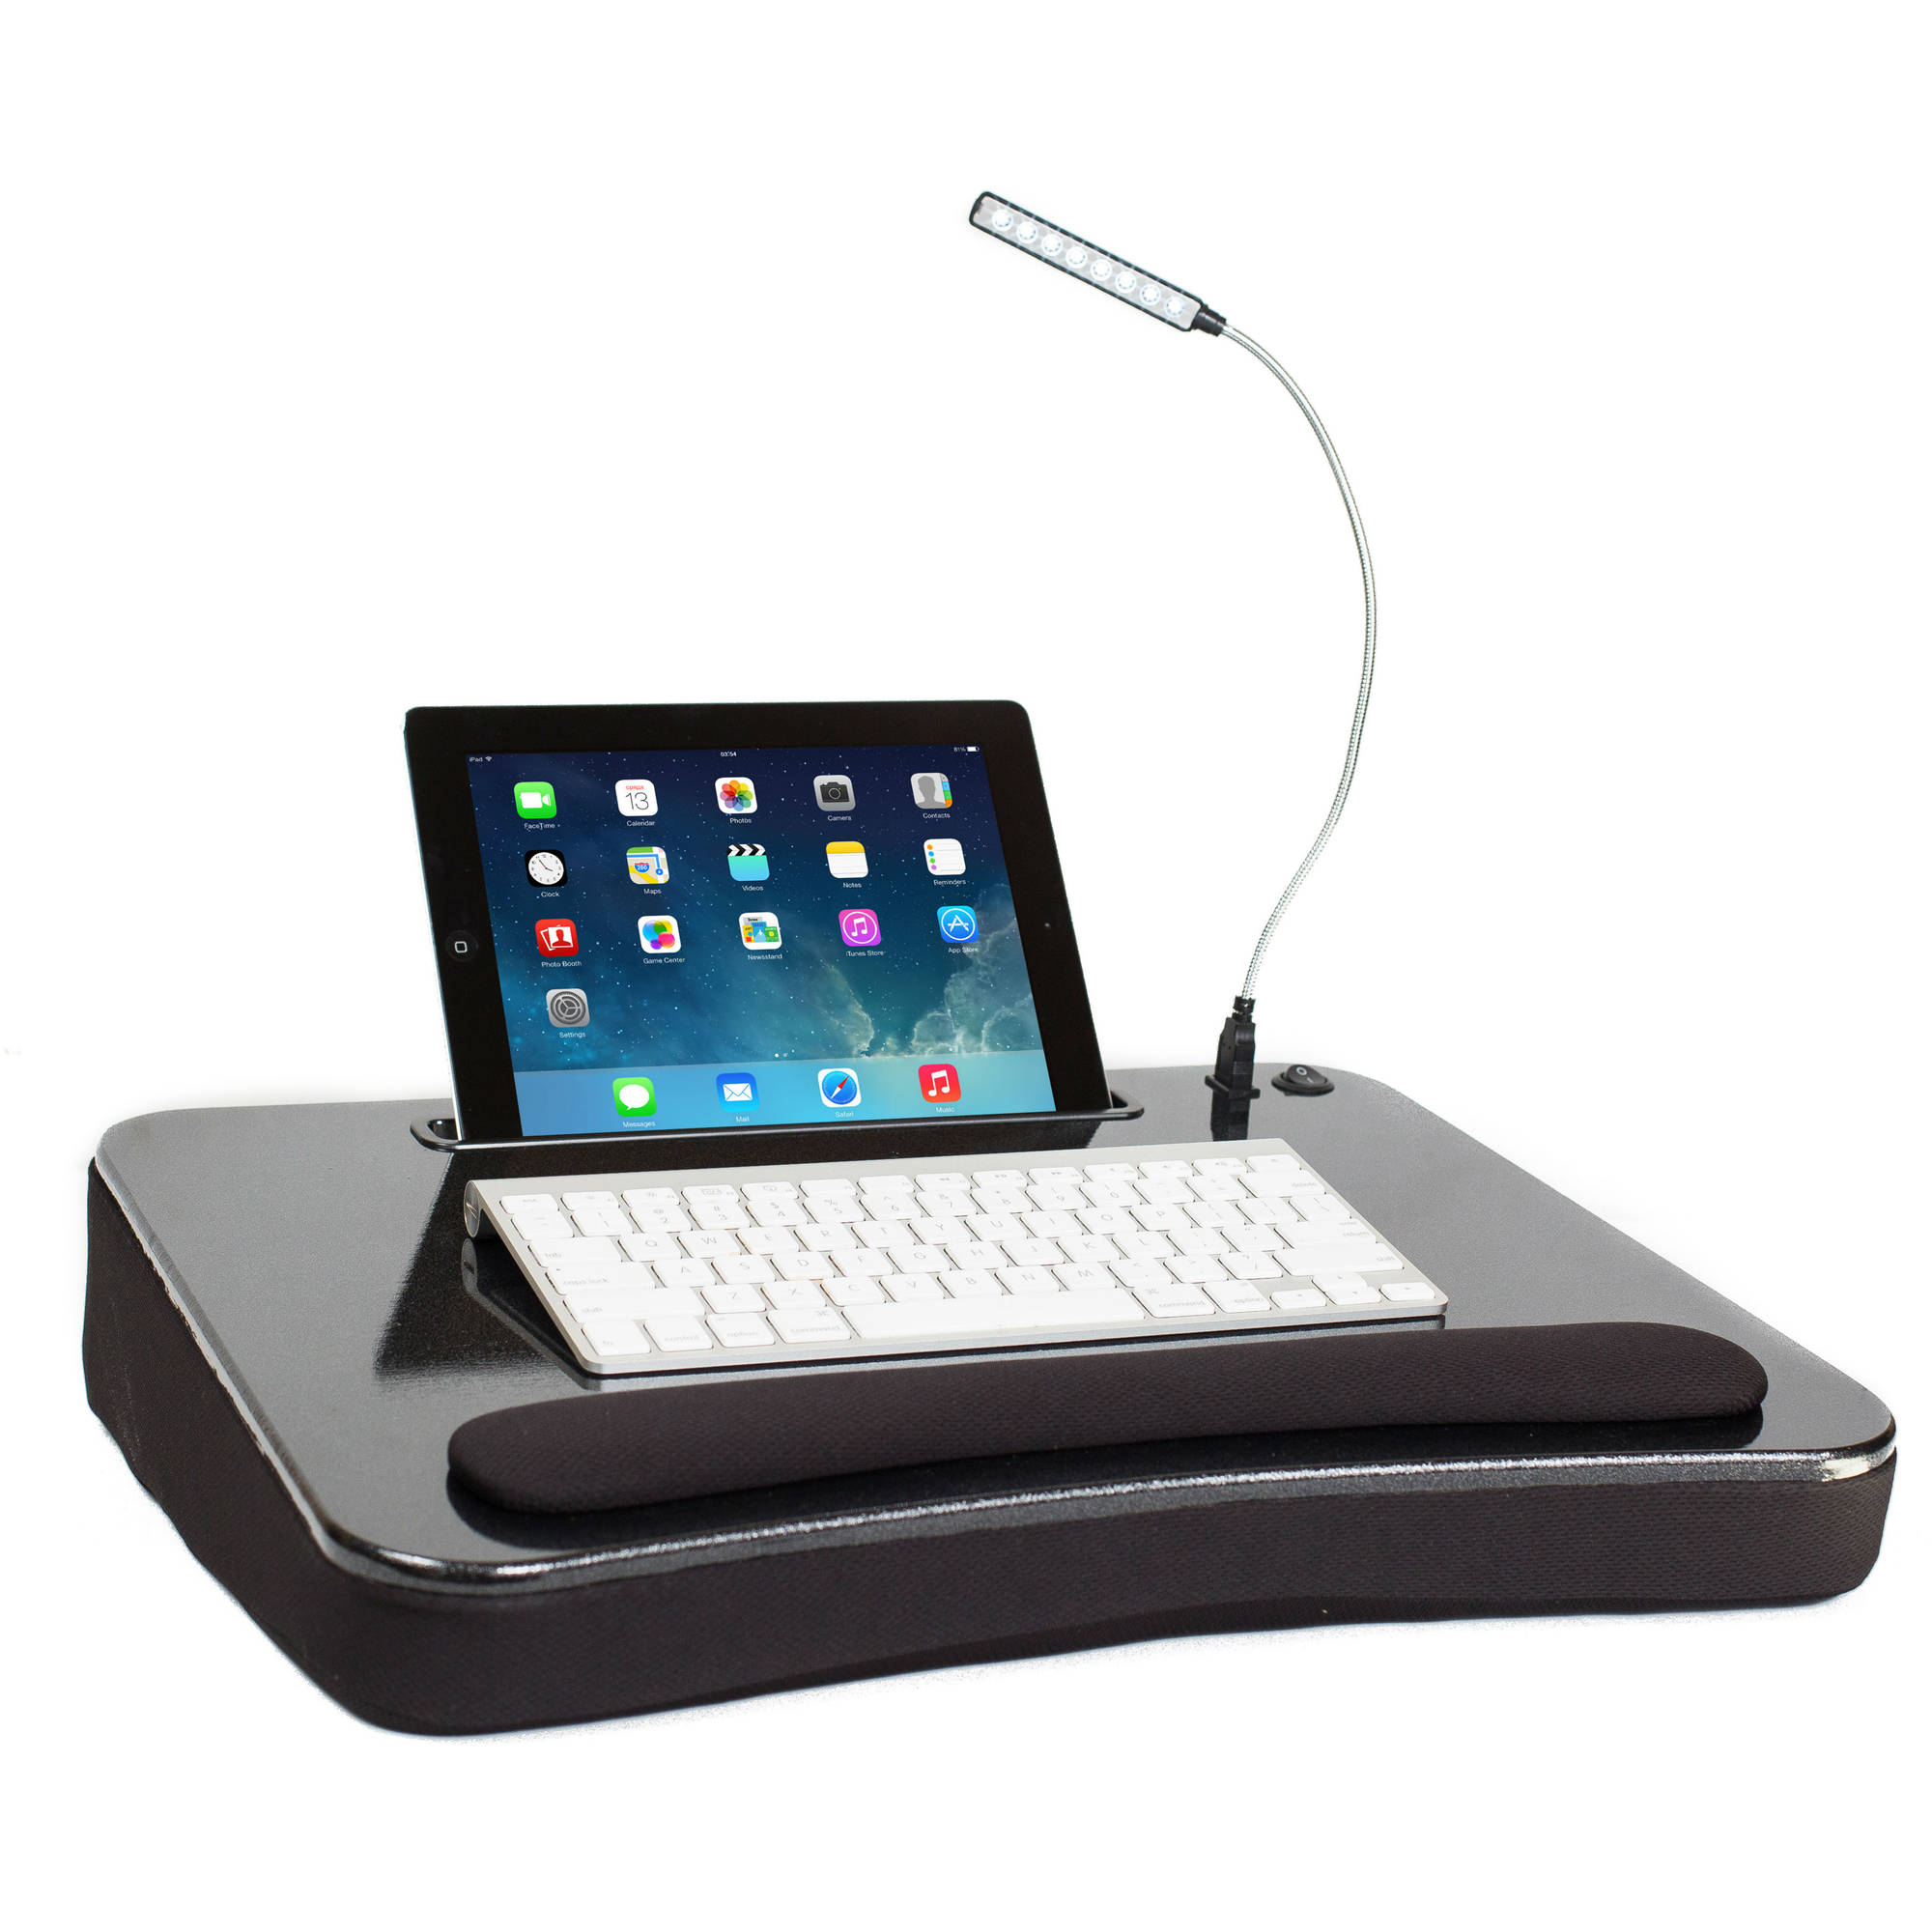 Sofia + Sam Lap Desk with USB Light and Tablet Slot - Black - image 1 of 7